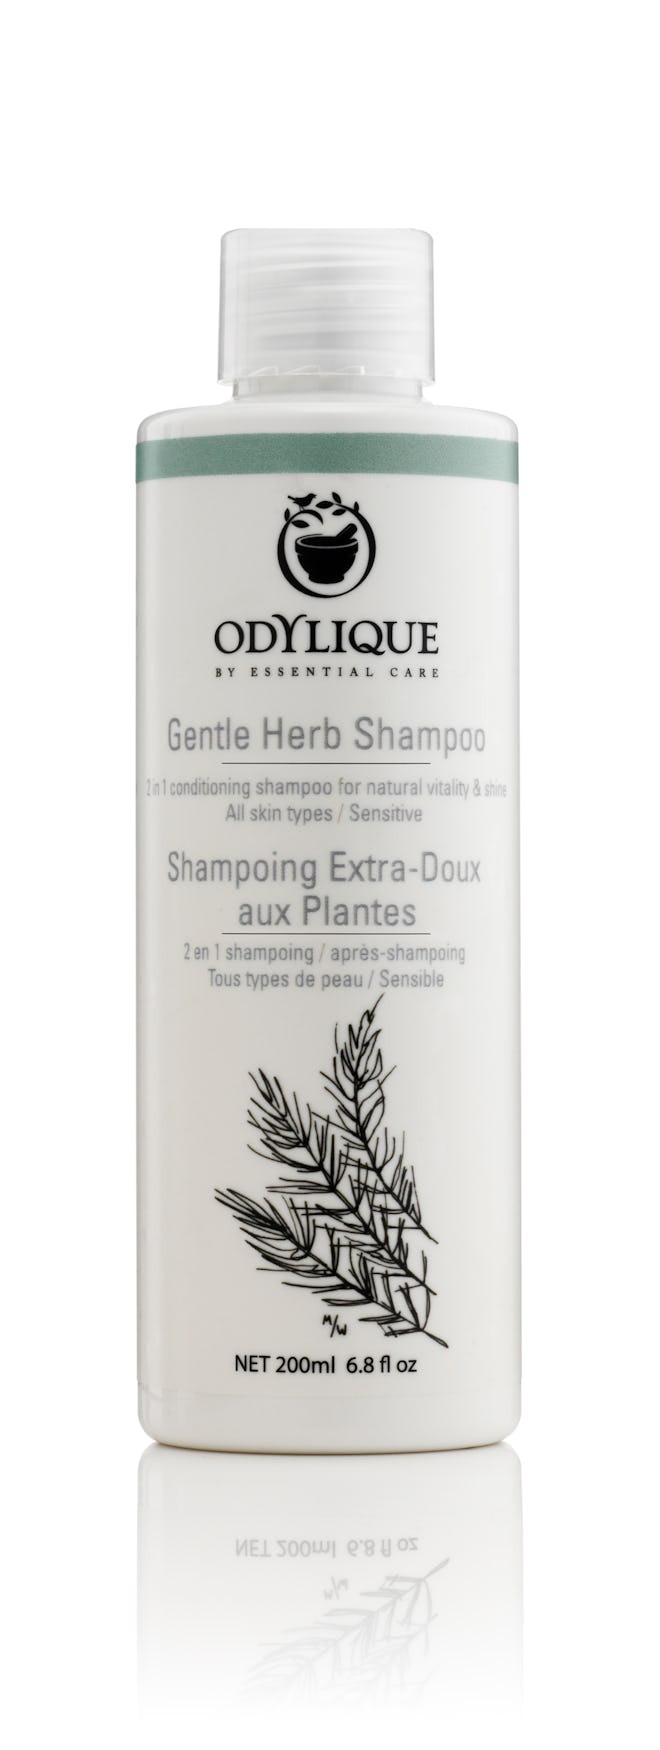 Gentle Herb Shampoo